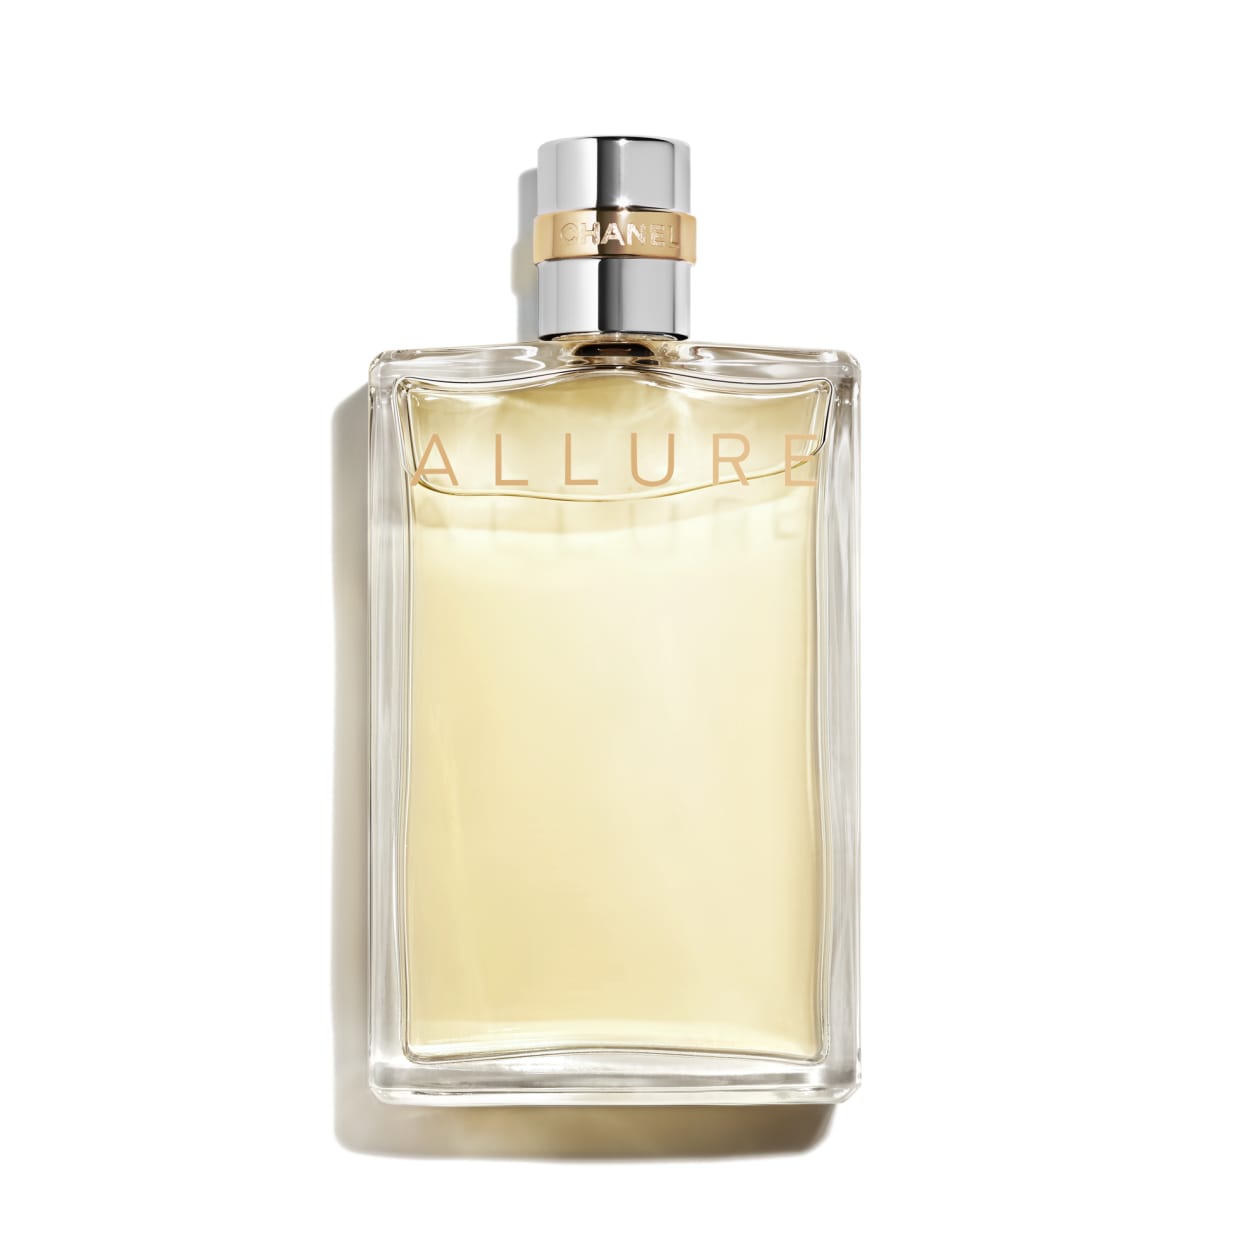 women's allure perfume